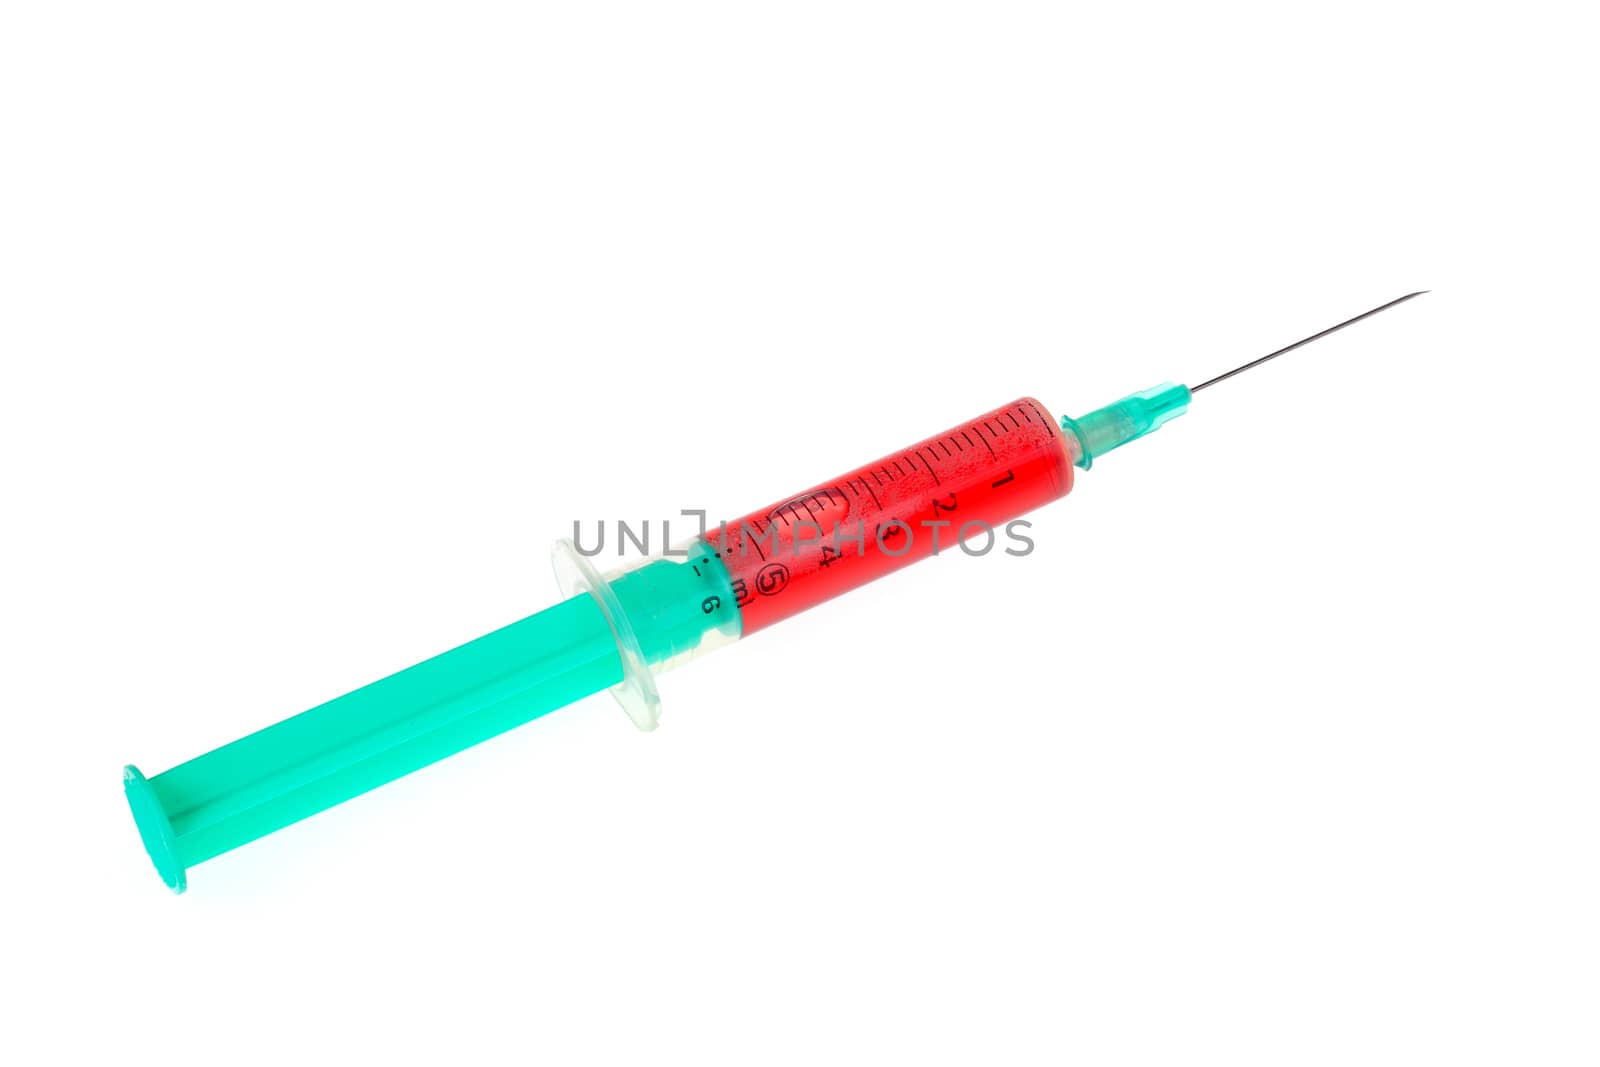 Syringe by Jova